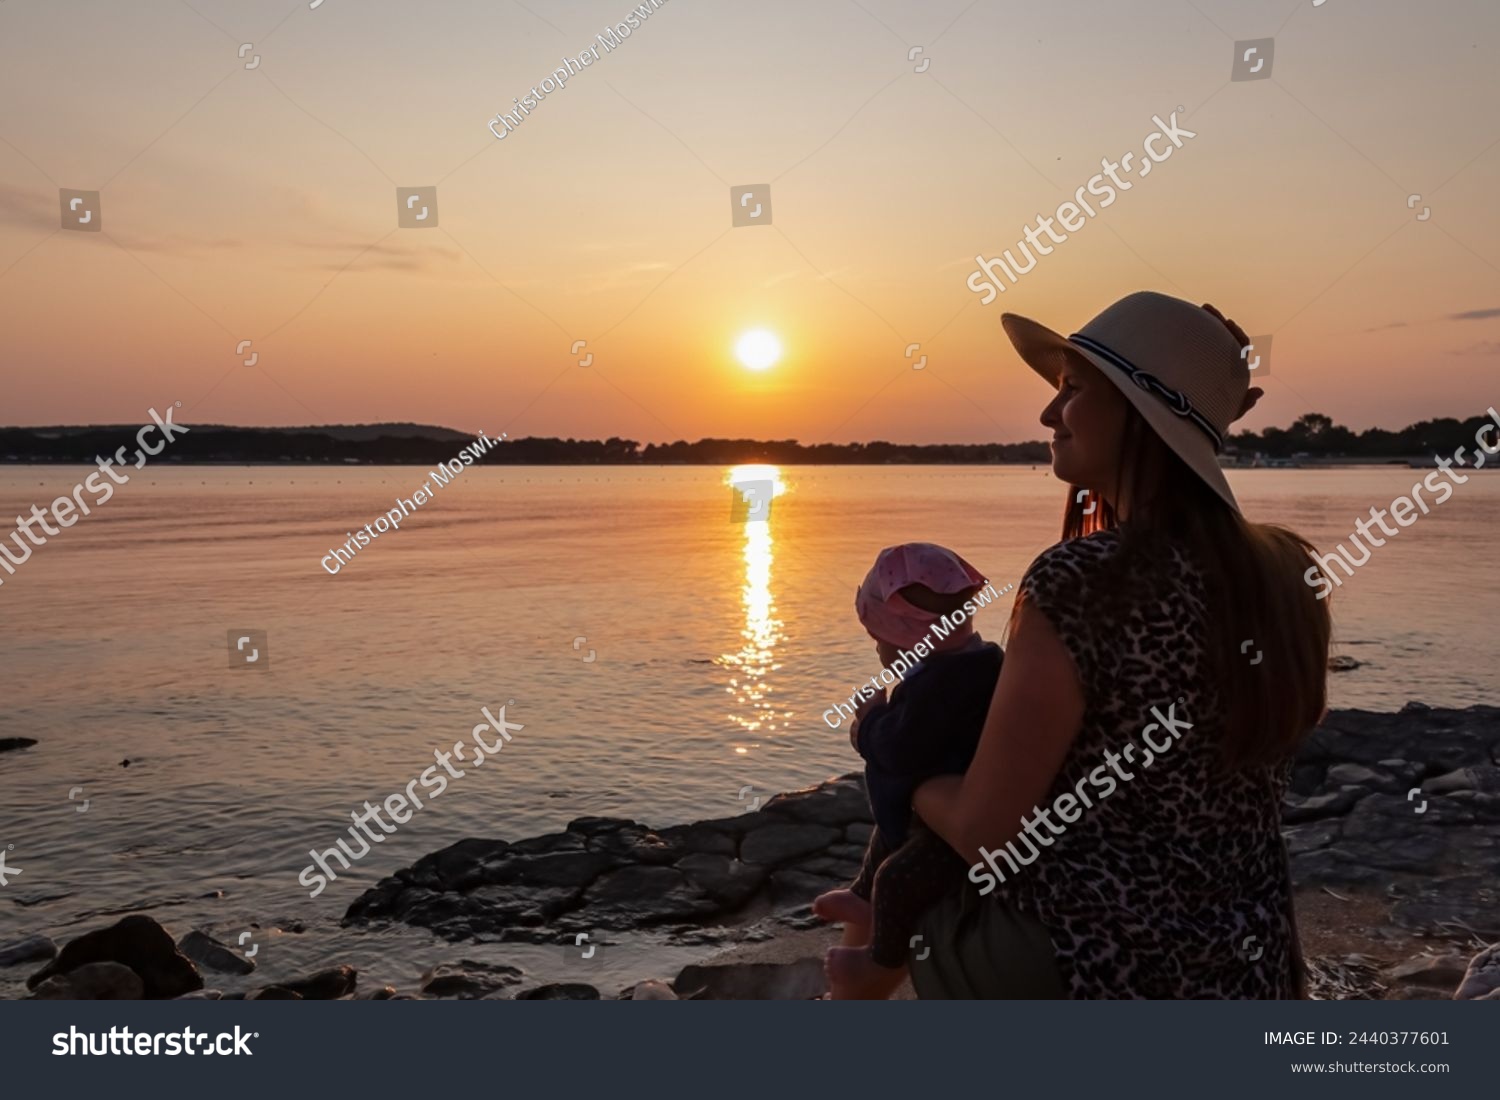 Loving mother holding small toddler enjoying romantic sunset in Medulin, Istria, Croatia, Europe. Coastline of Kvarner Gulf in Adriatic Mediterranean Sea. Dreamlike atmosphere. Family vacation concept #2440377601